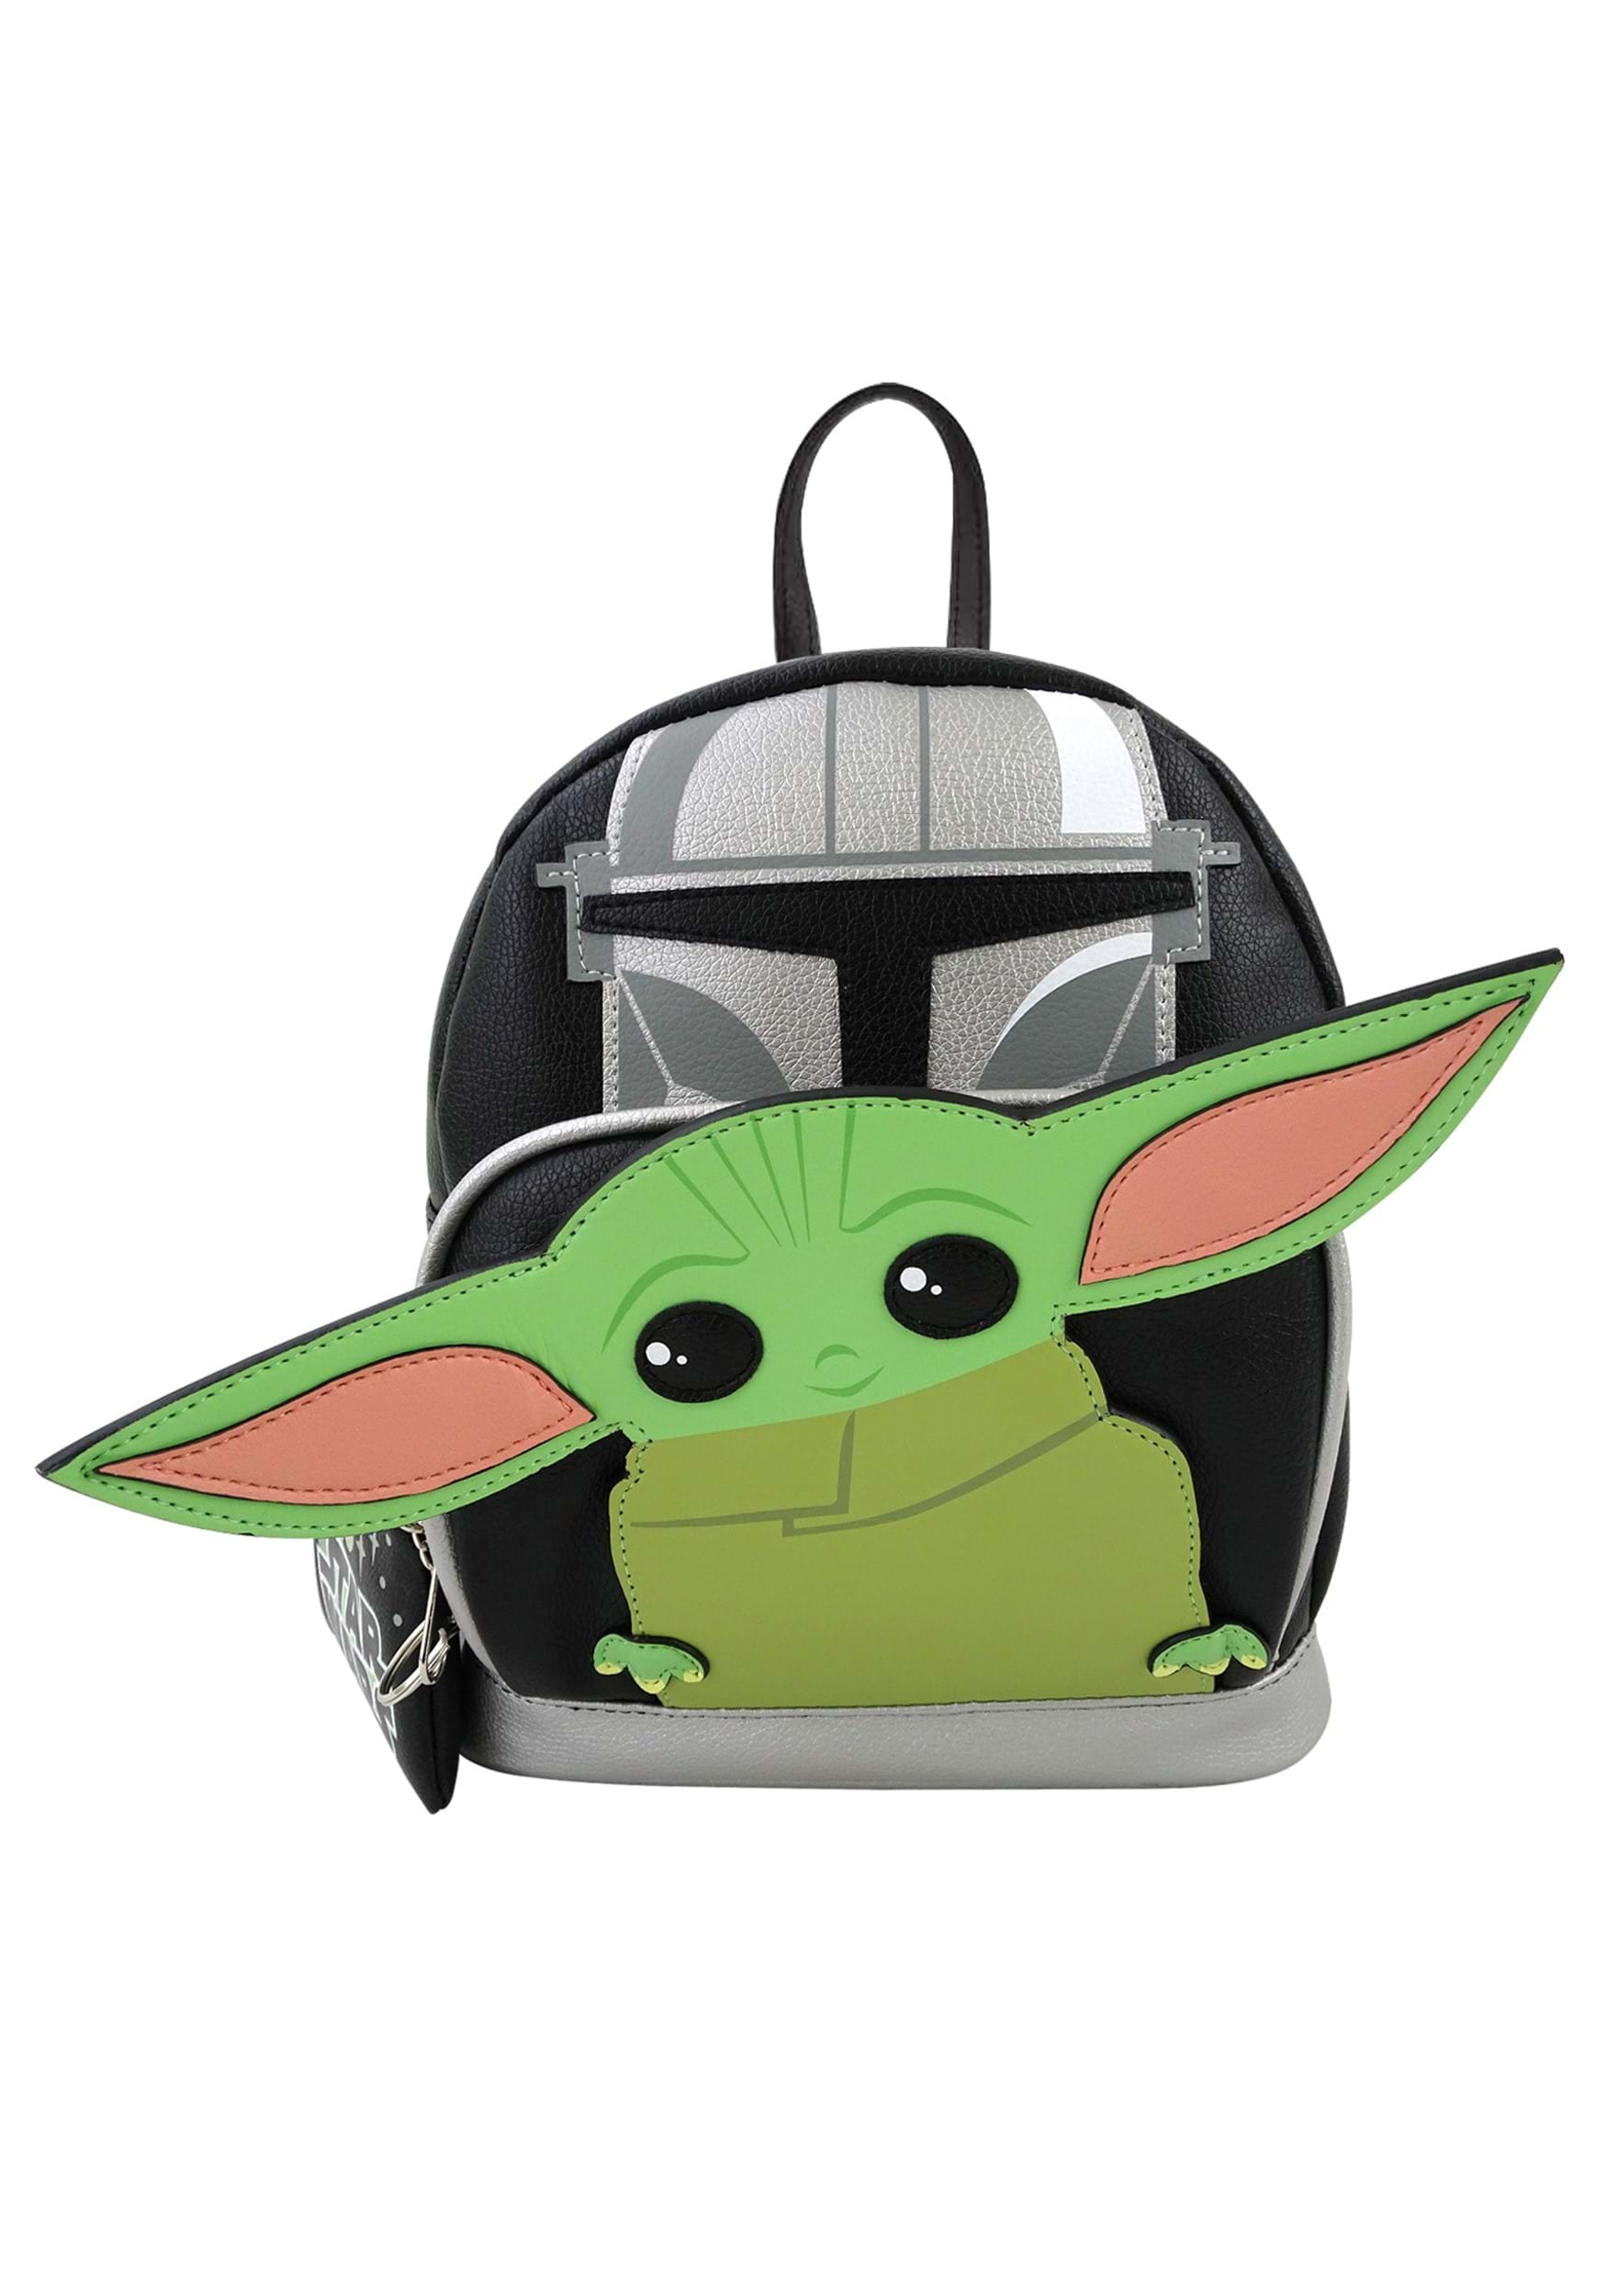 Star Wars Mandalorian Grogu Mini Backpack